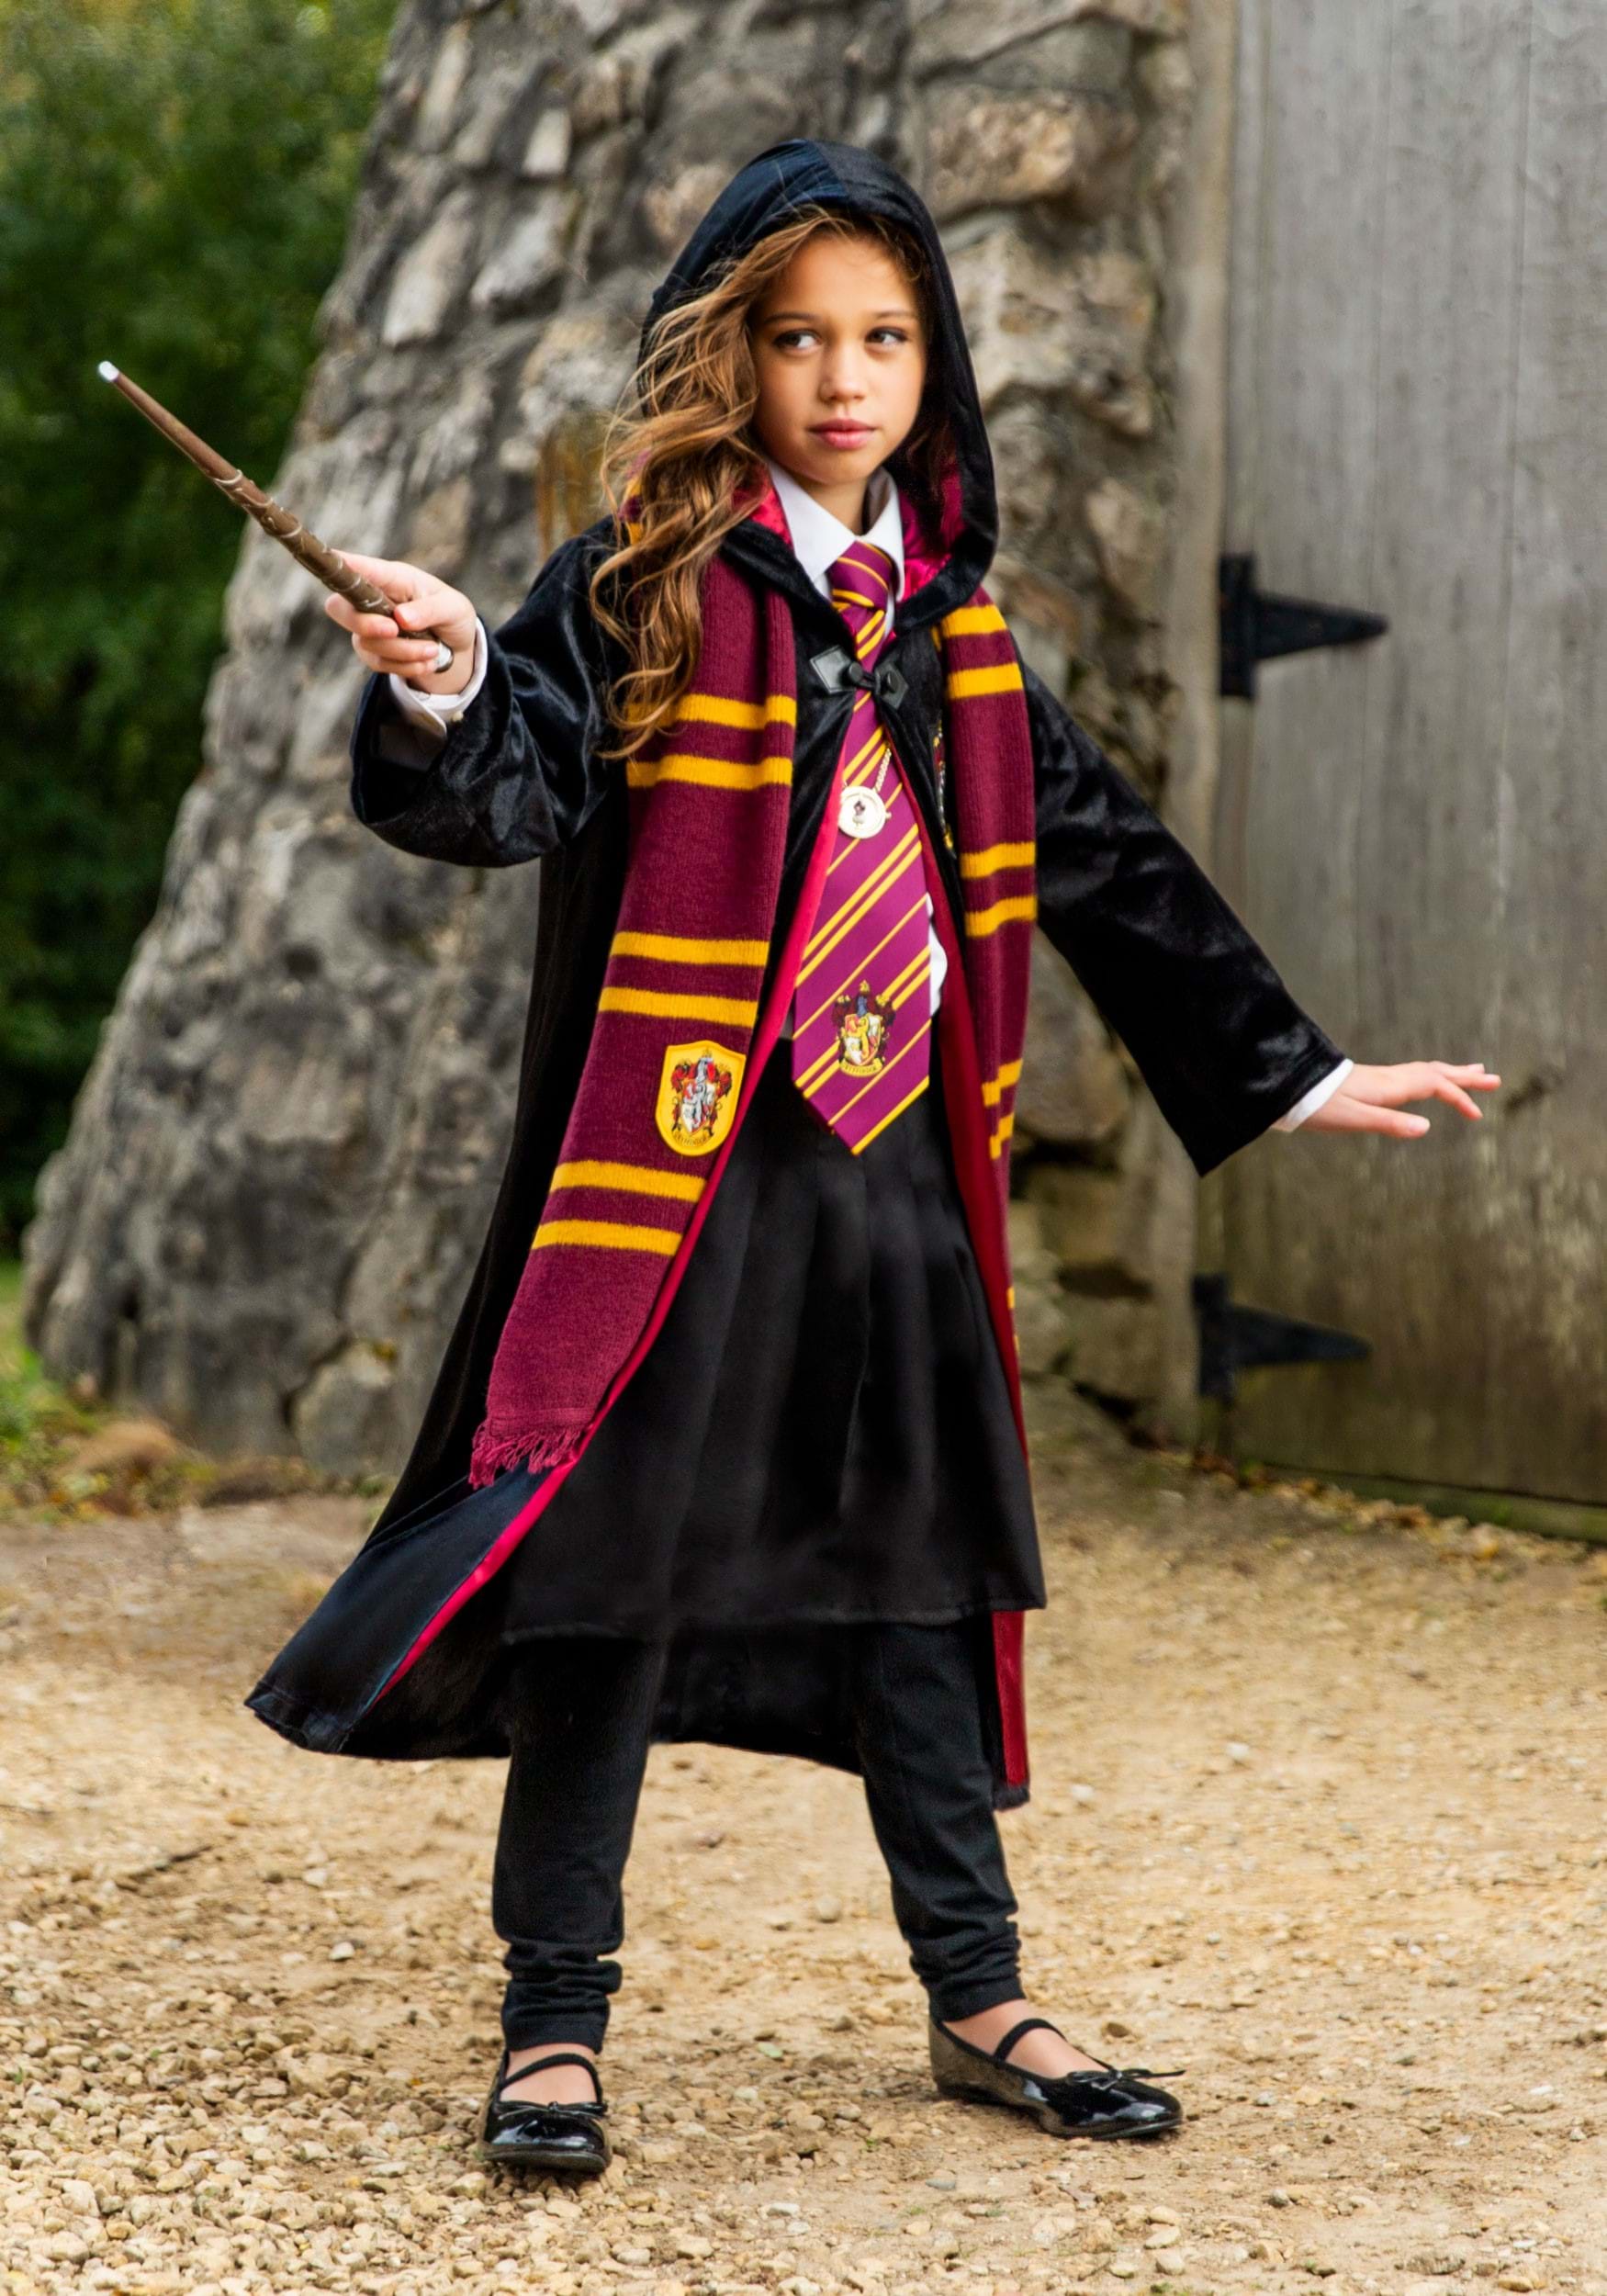 Harry Potter Kid's Deluxe Hermione Gryffindor Robe